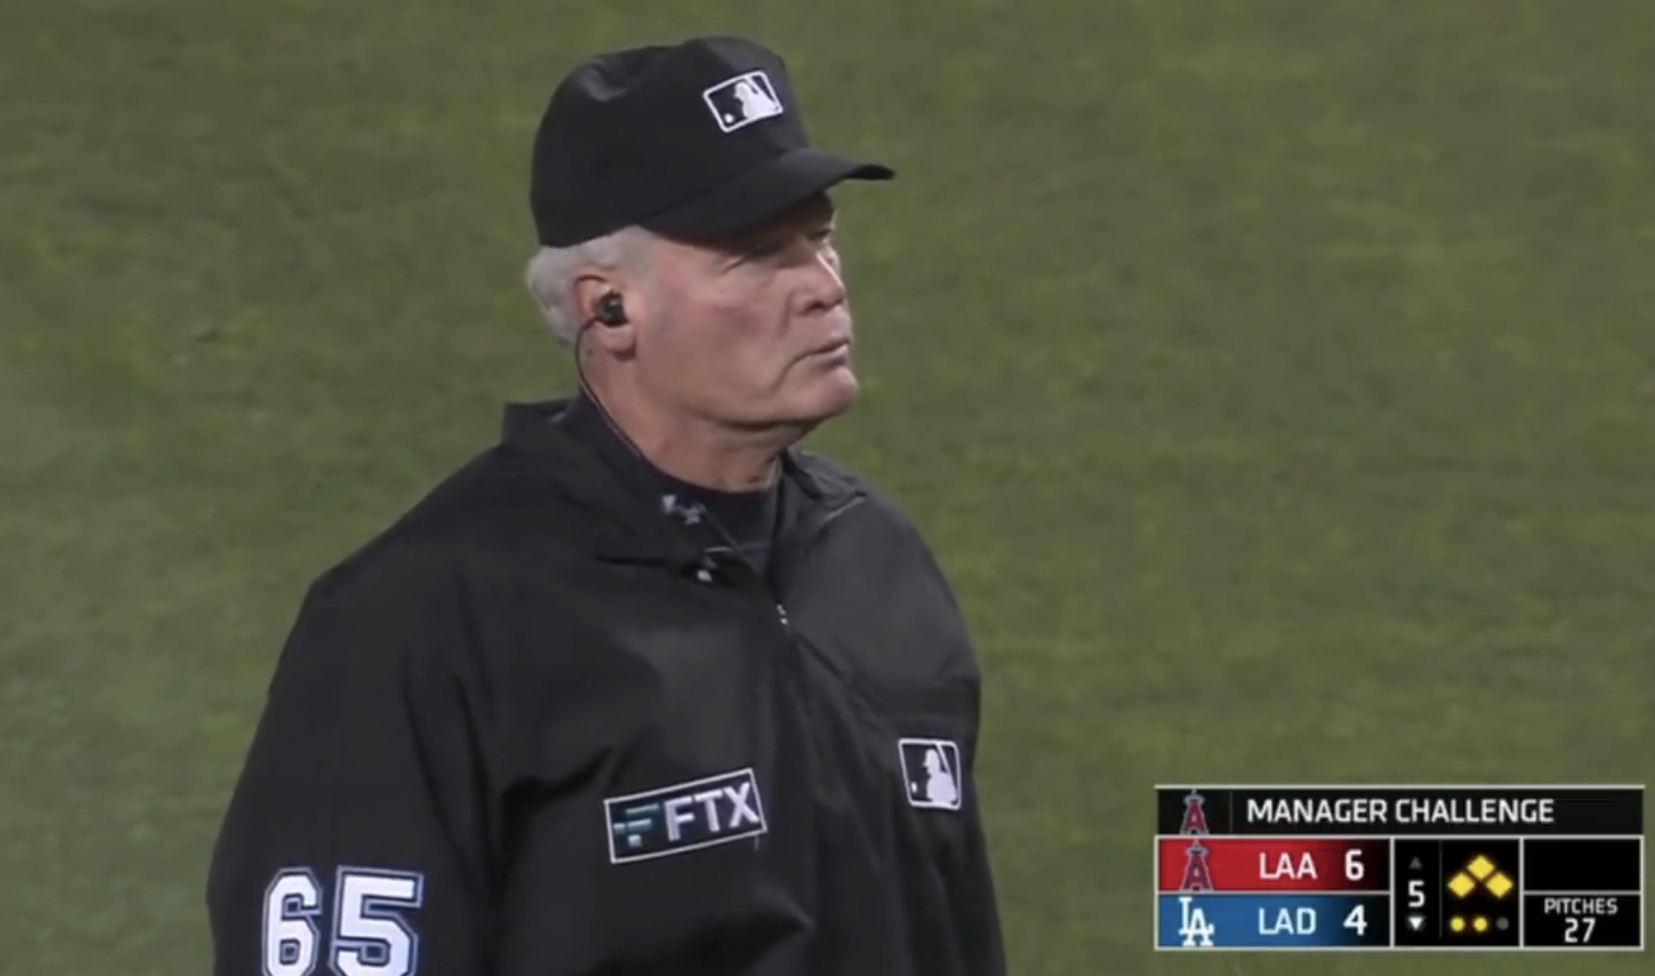 major league baseball umpire uniforms